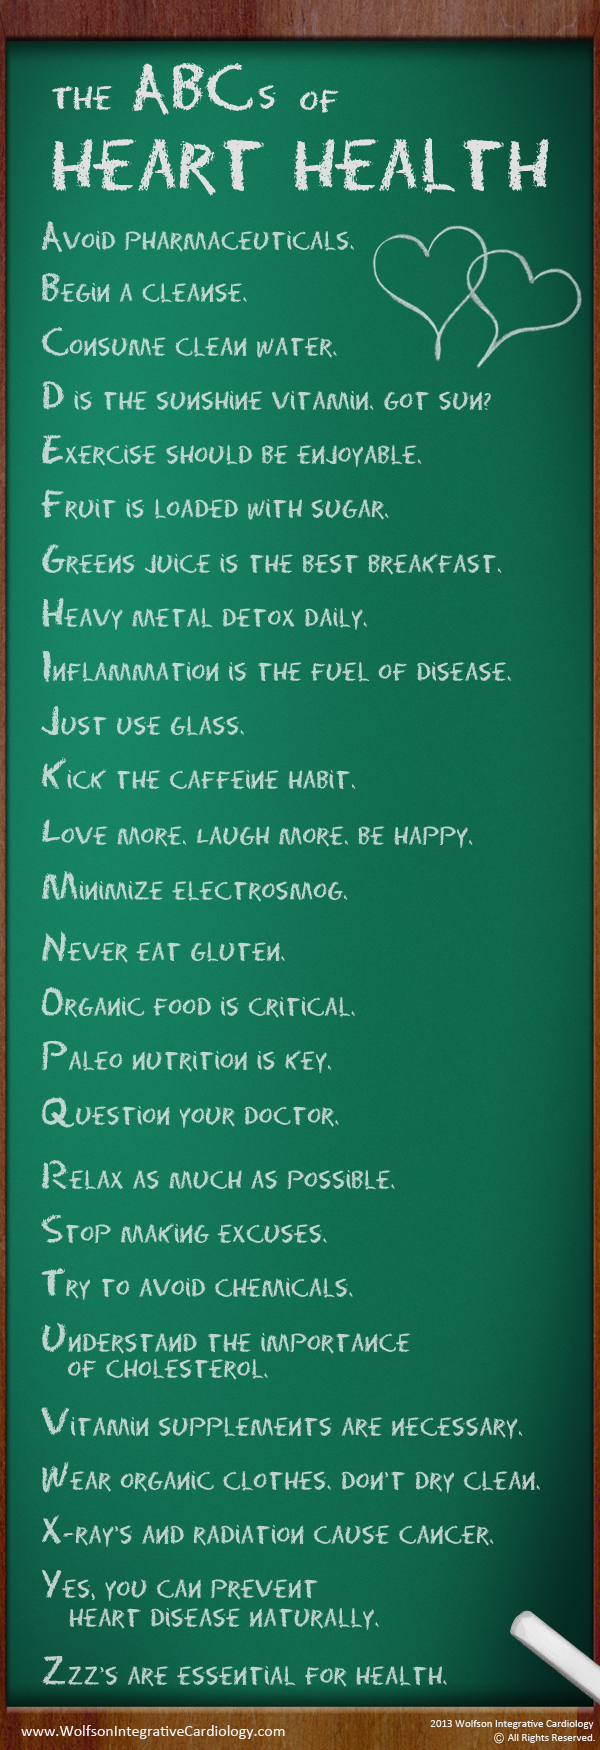 The ABCs of Heart Health